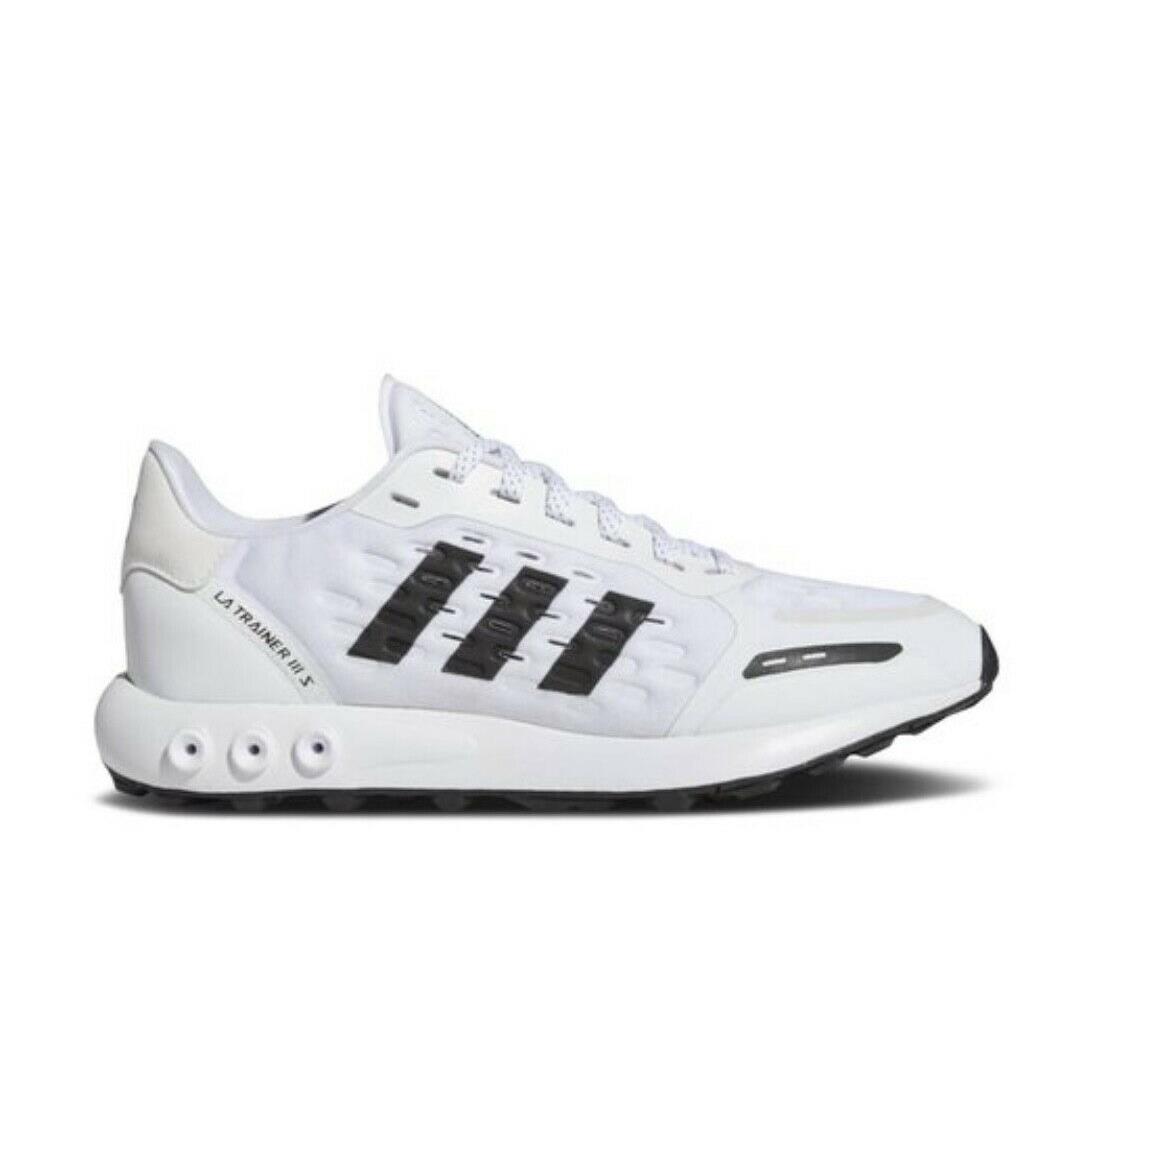 Adidas LA Trainer 3 Mens Sz 11.5 Casual Running Shoe White Black Trainer Sneaker